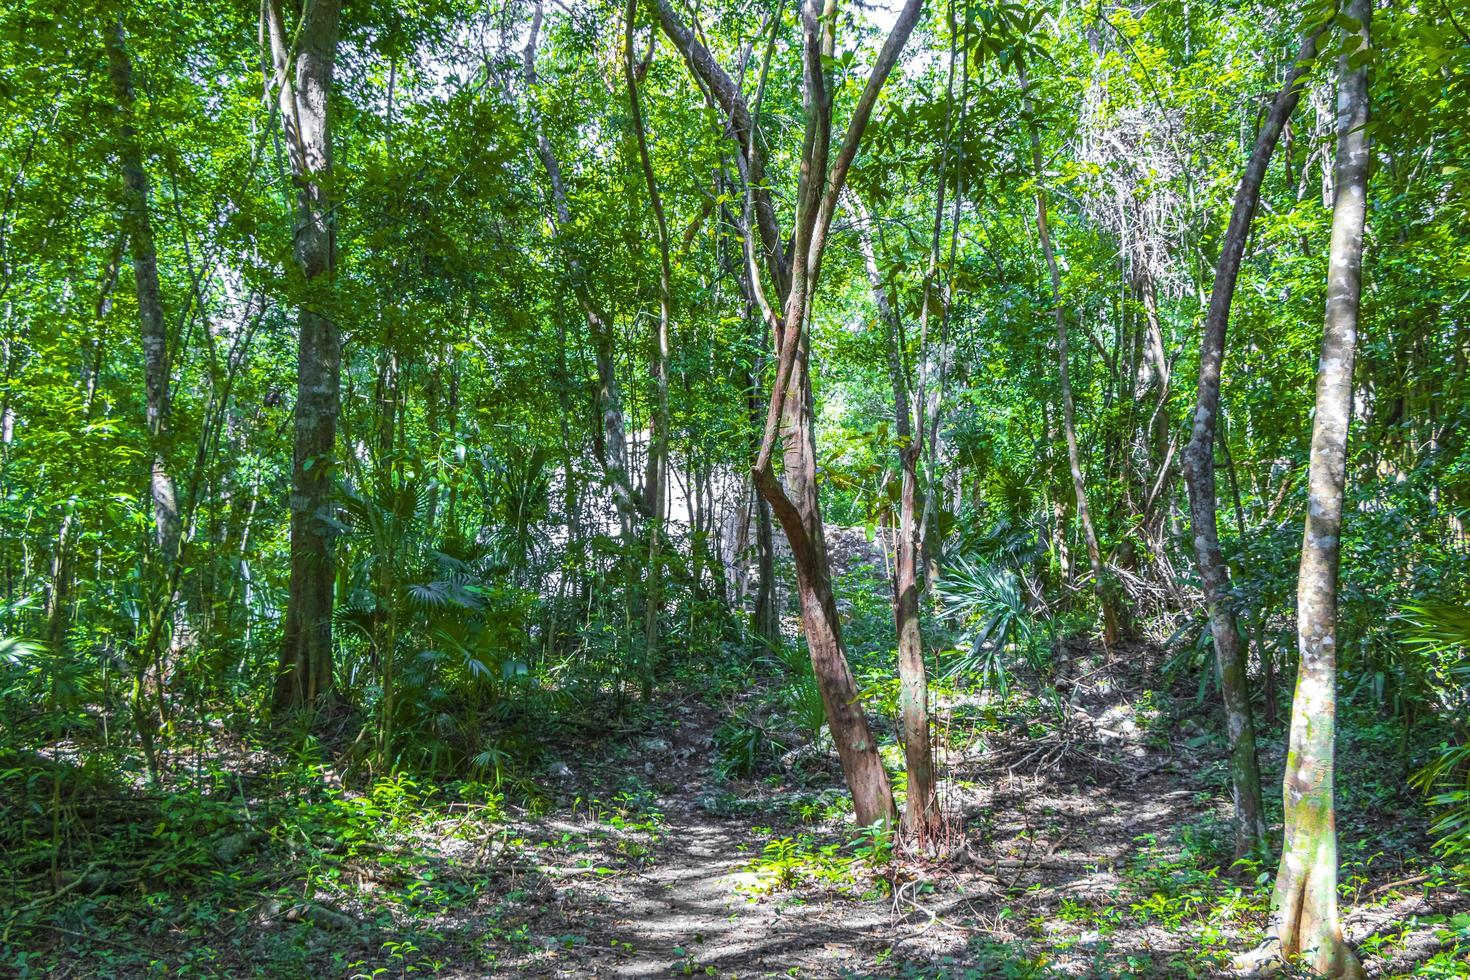 tropischer dschungel pflanzt bäume wanderwege muyil maya ruinen mexiko. foto